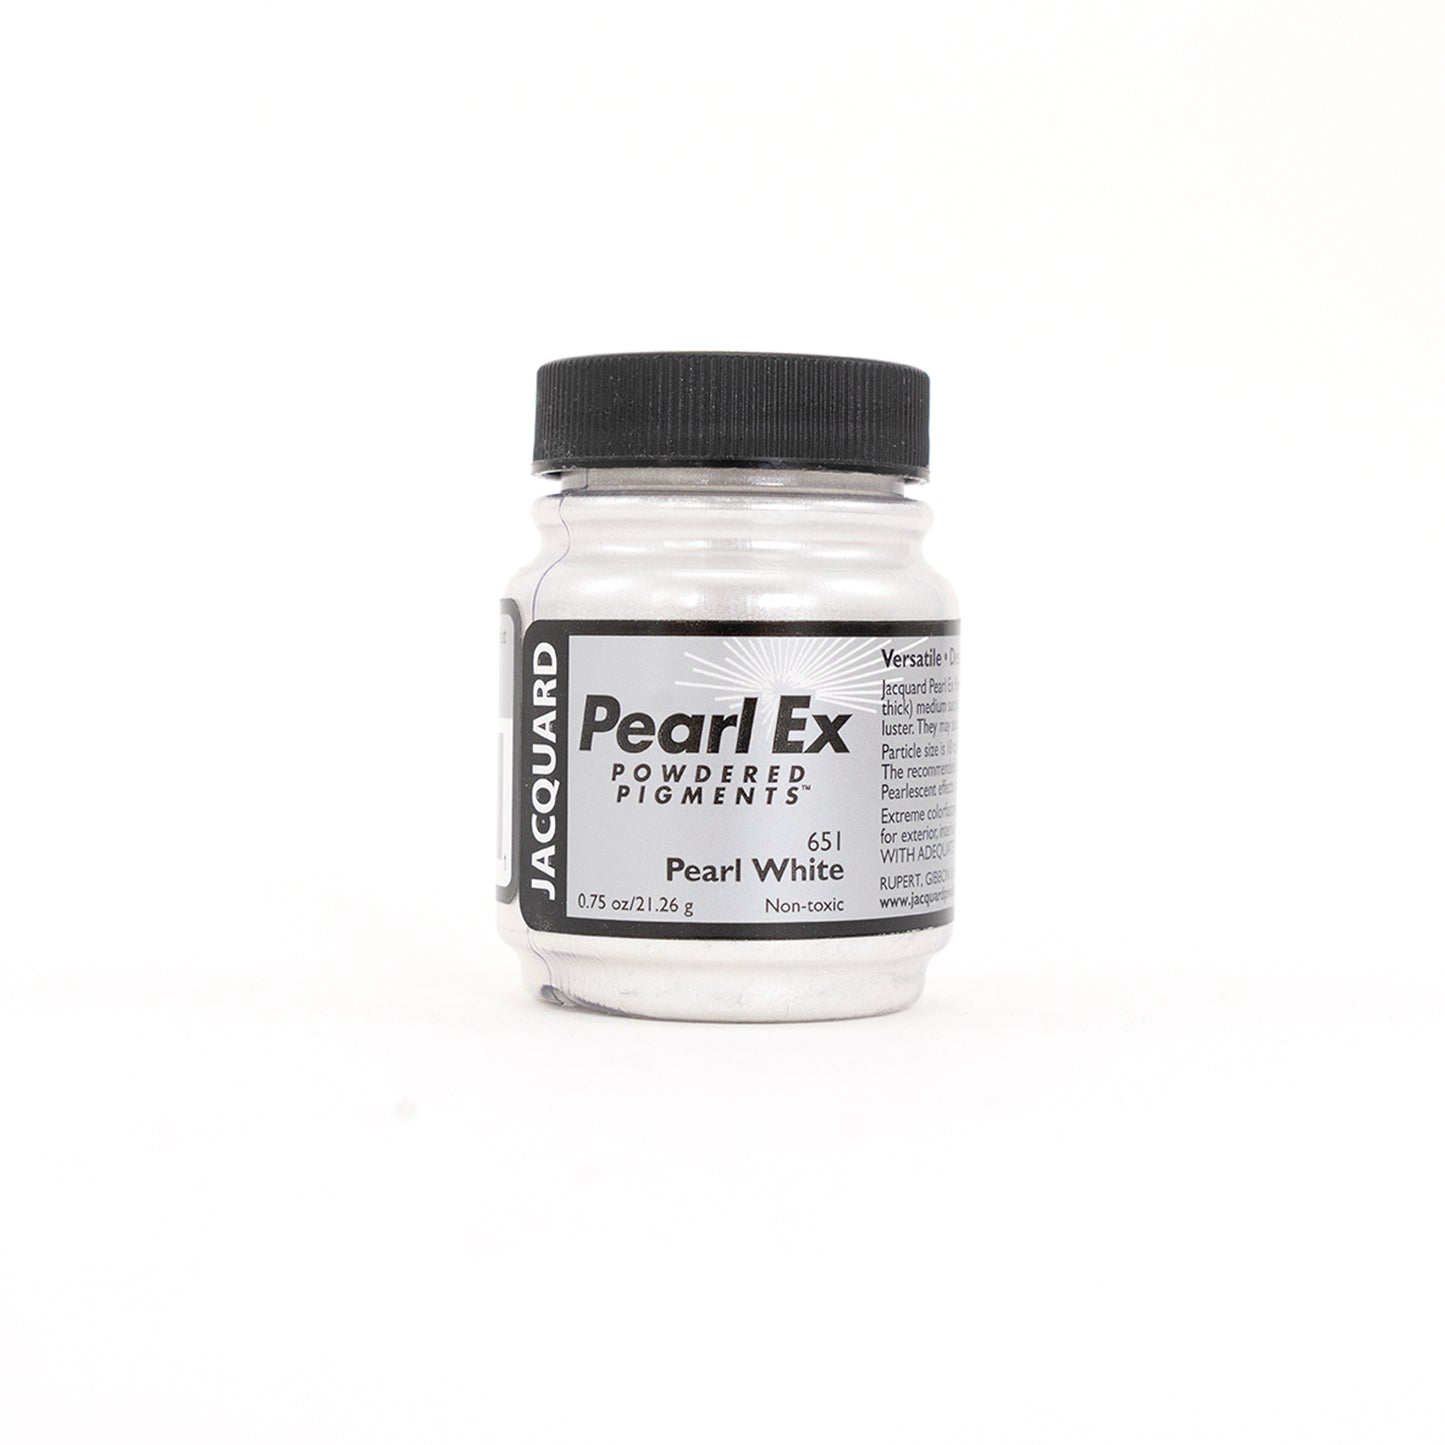 Jacquard PearlEx Powdered Pigments - 0.75 oz jars - Pearl White by Jacquard - K. A. Artist Shop